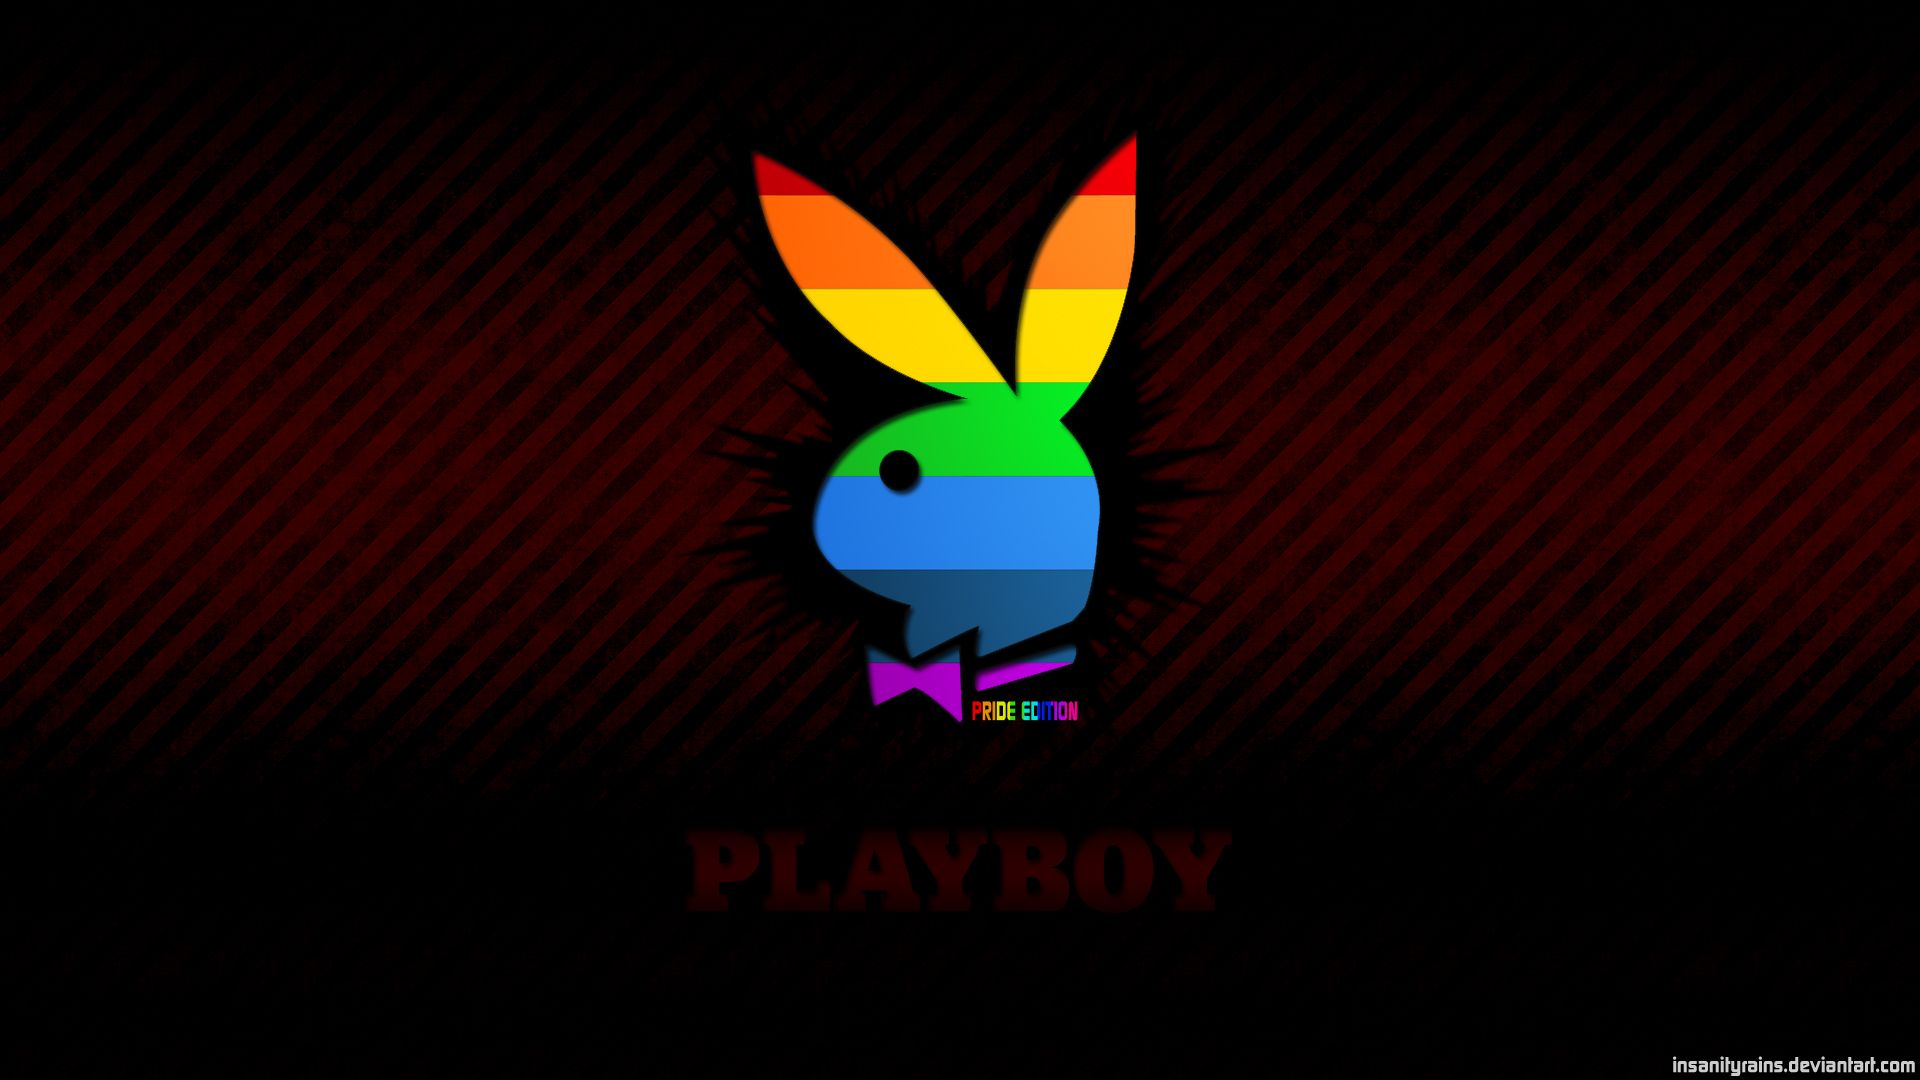 Playboy Pride Edition 1920x1080 by insanityrains on DeviantArt